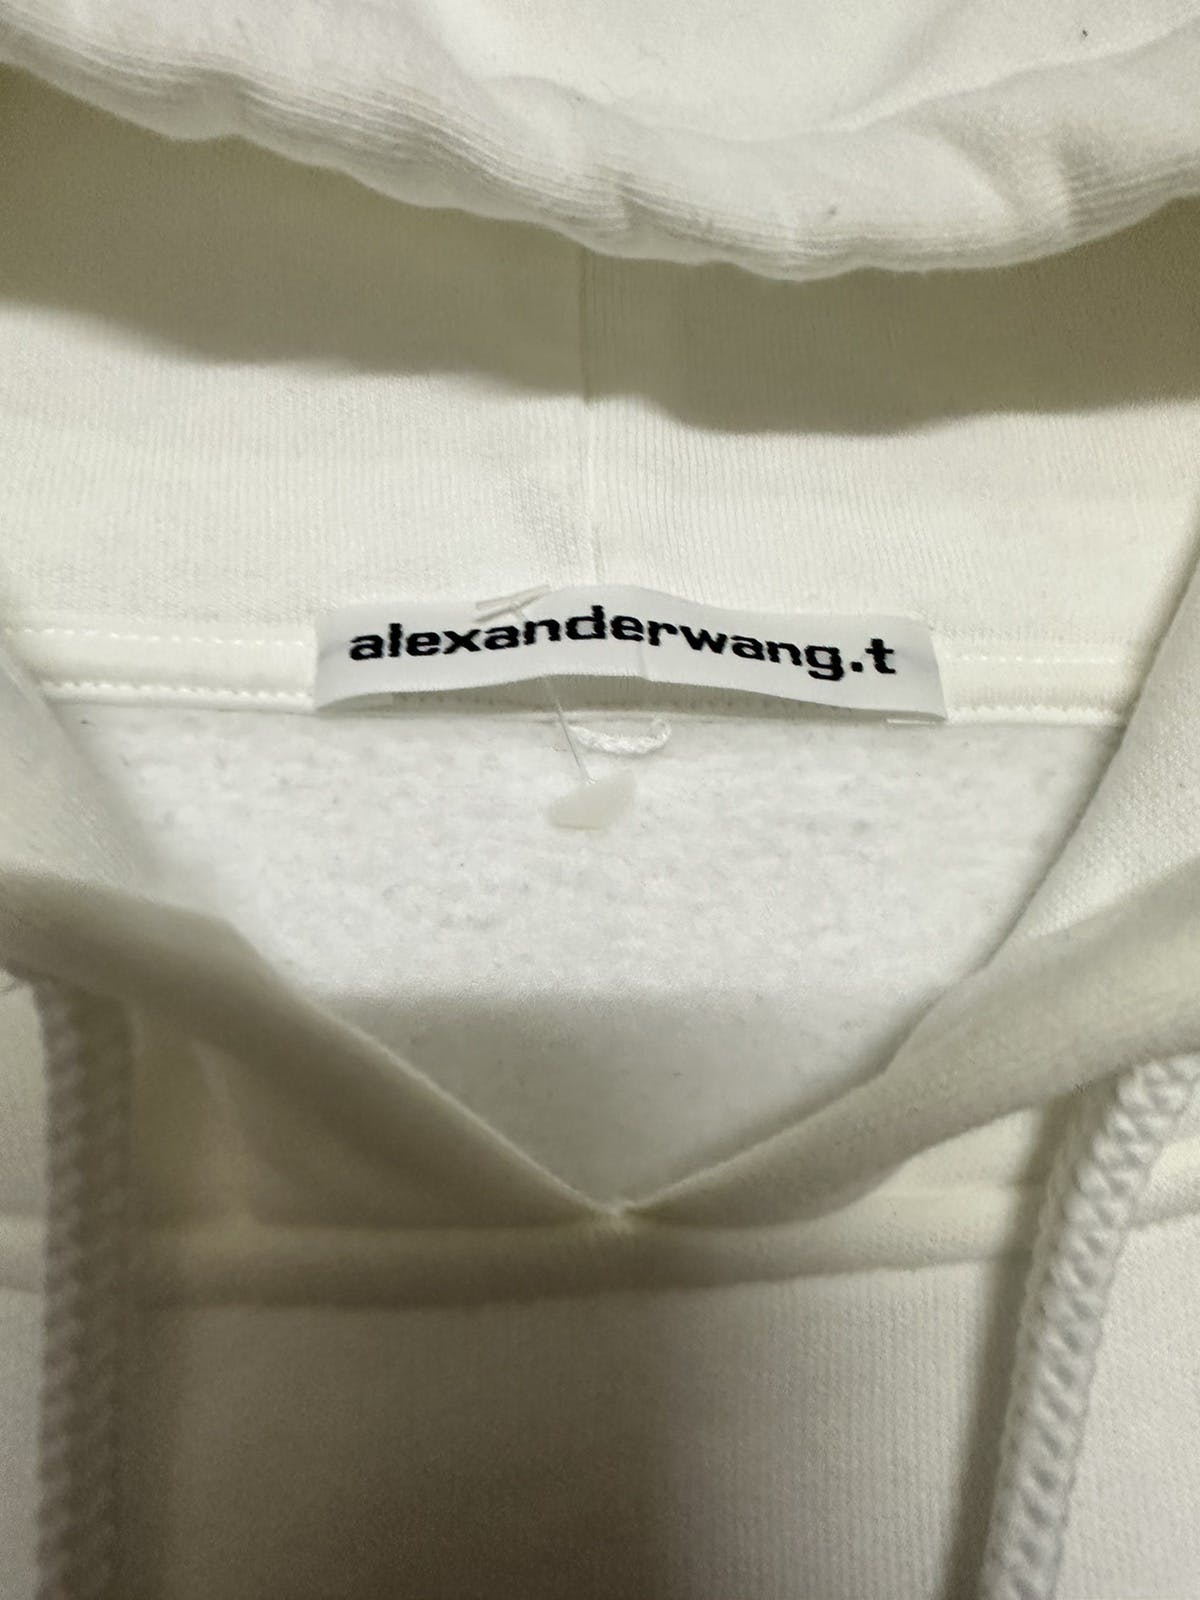 Alexander wang t plain hoodie - 3